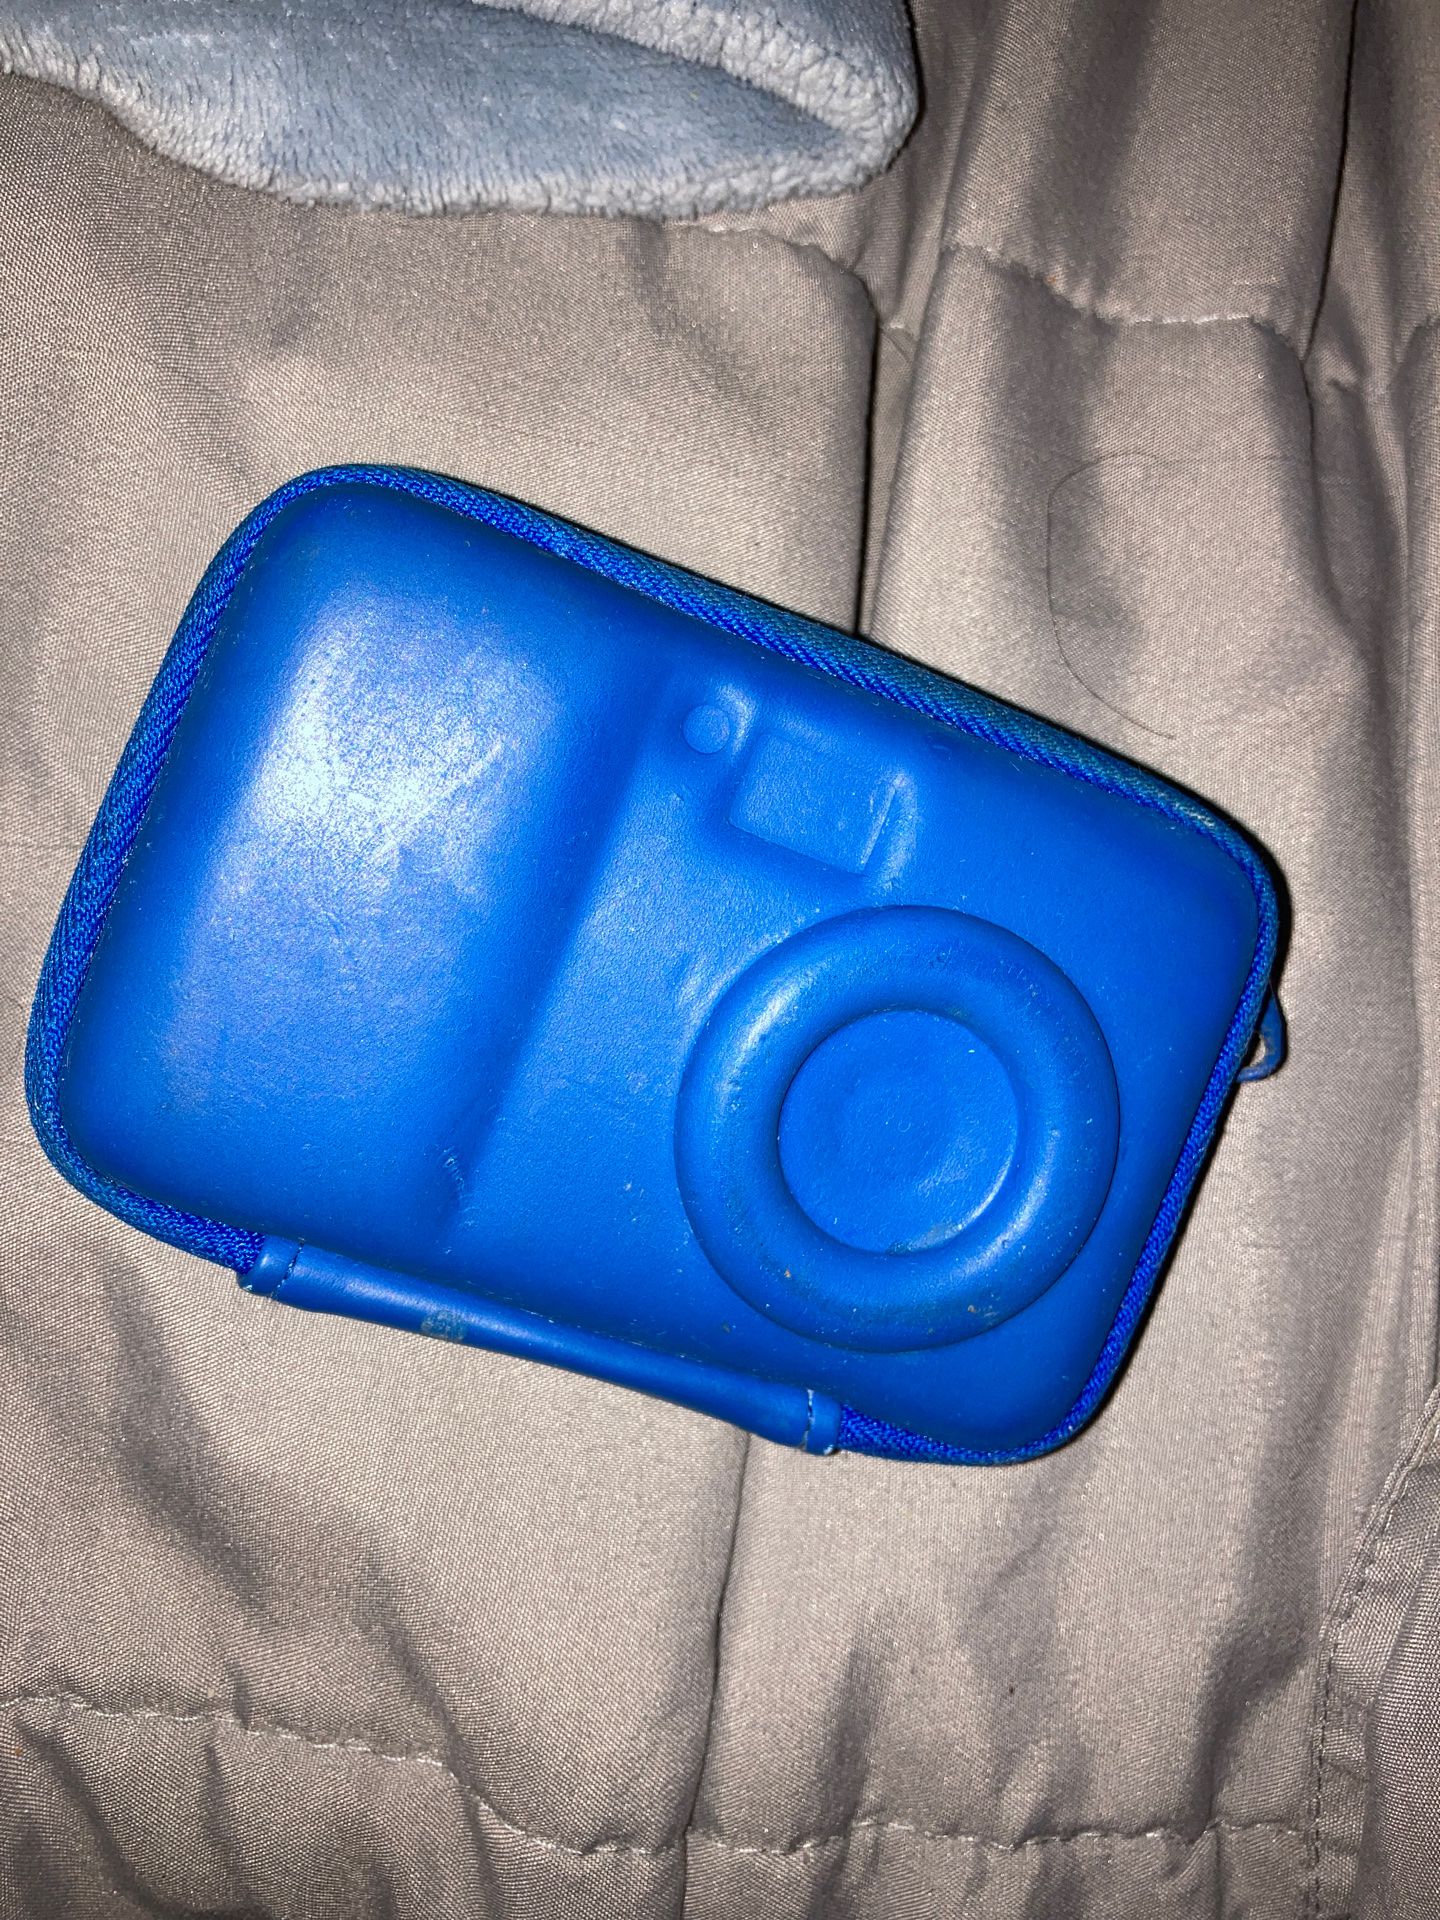 Free digital camera case